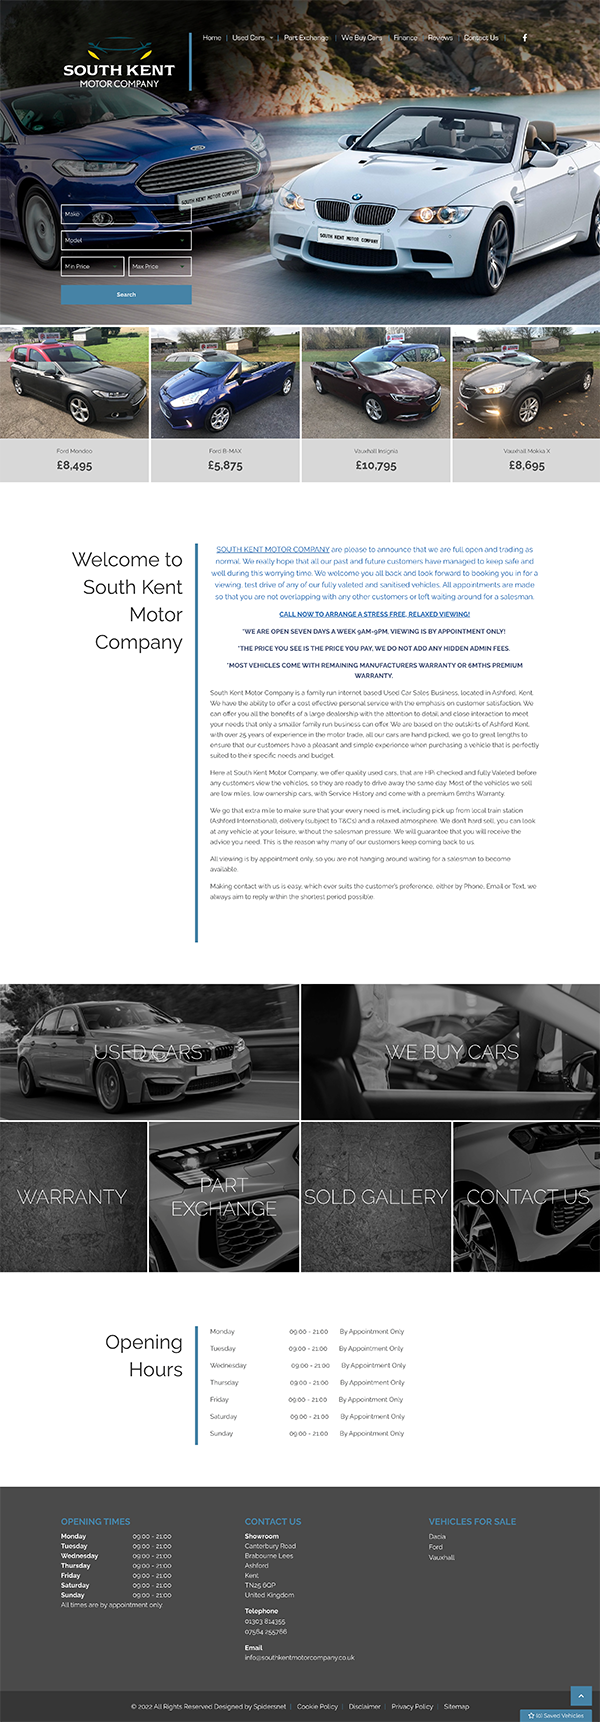 South Kent Motor Company